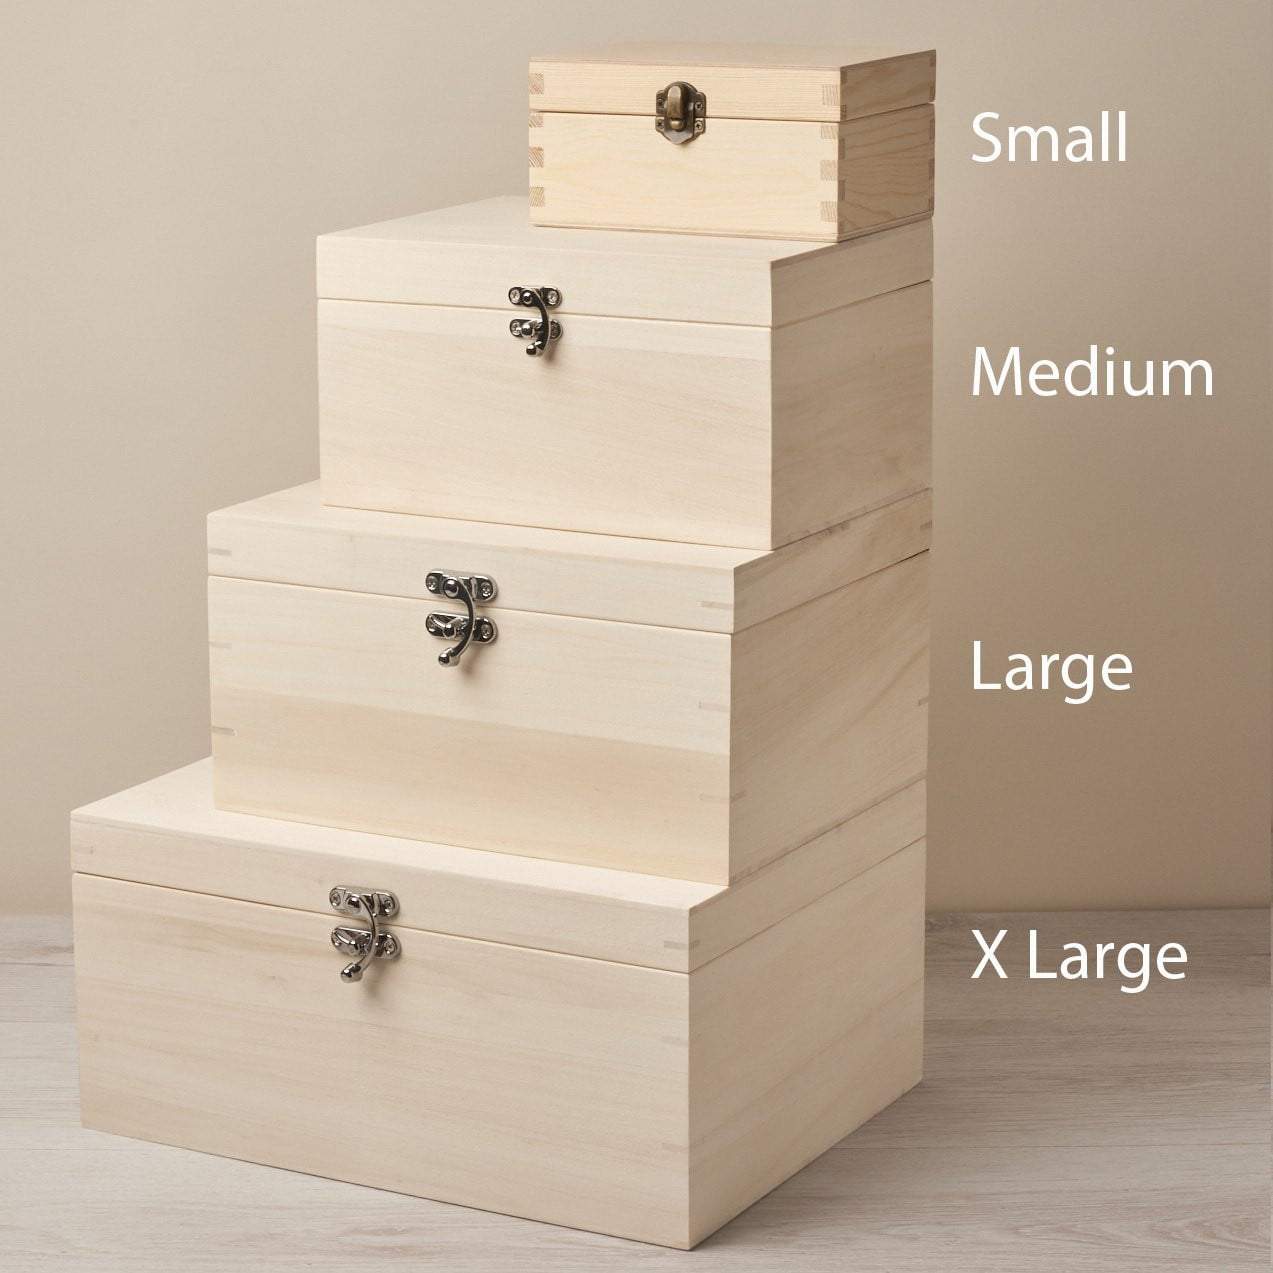 Keepsake Box - Personalised Wooden Pet Memorial Box - Small Paws